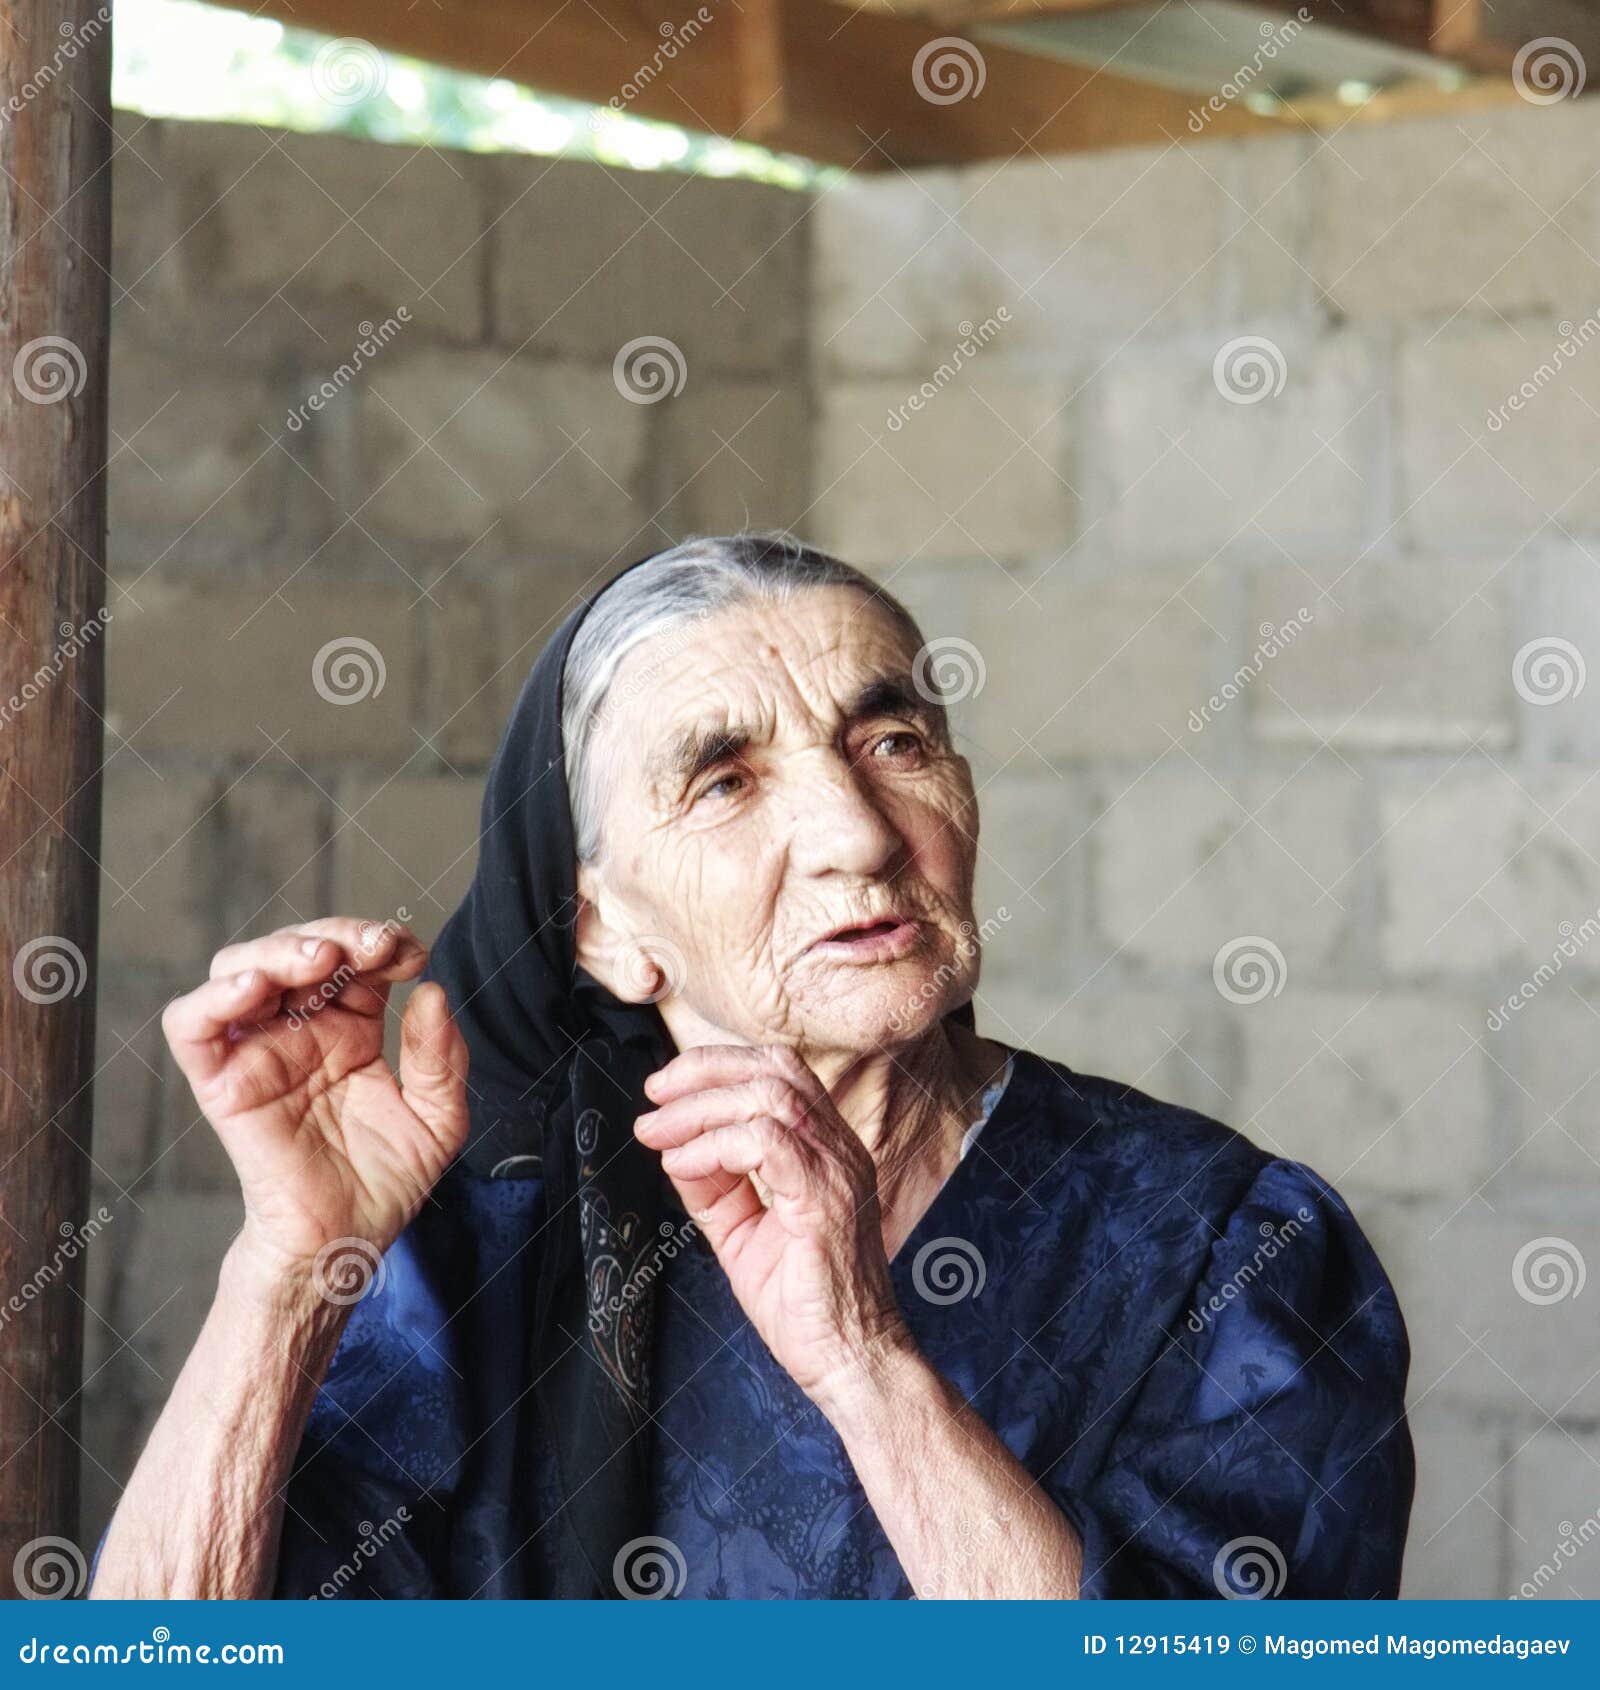 gesticulating elderly woman